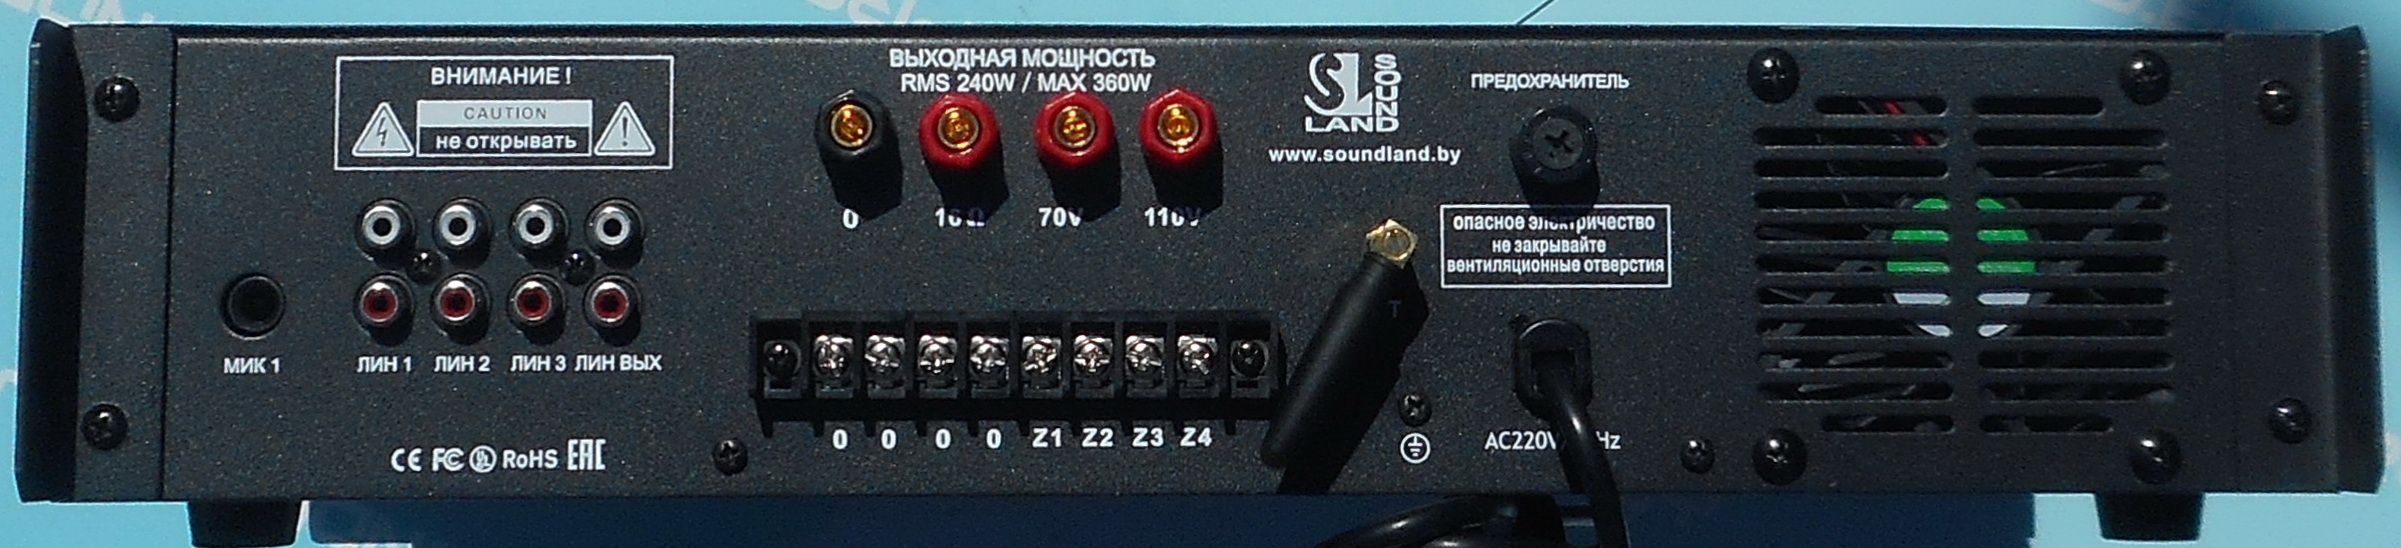 HL Audio SF-240M Саунд ЛД трансляц. усилитель 240вт, 4 зоны, 2микроф+3стерео, МР-3 + USB, Bluetooth